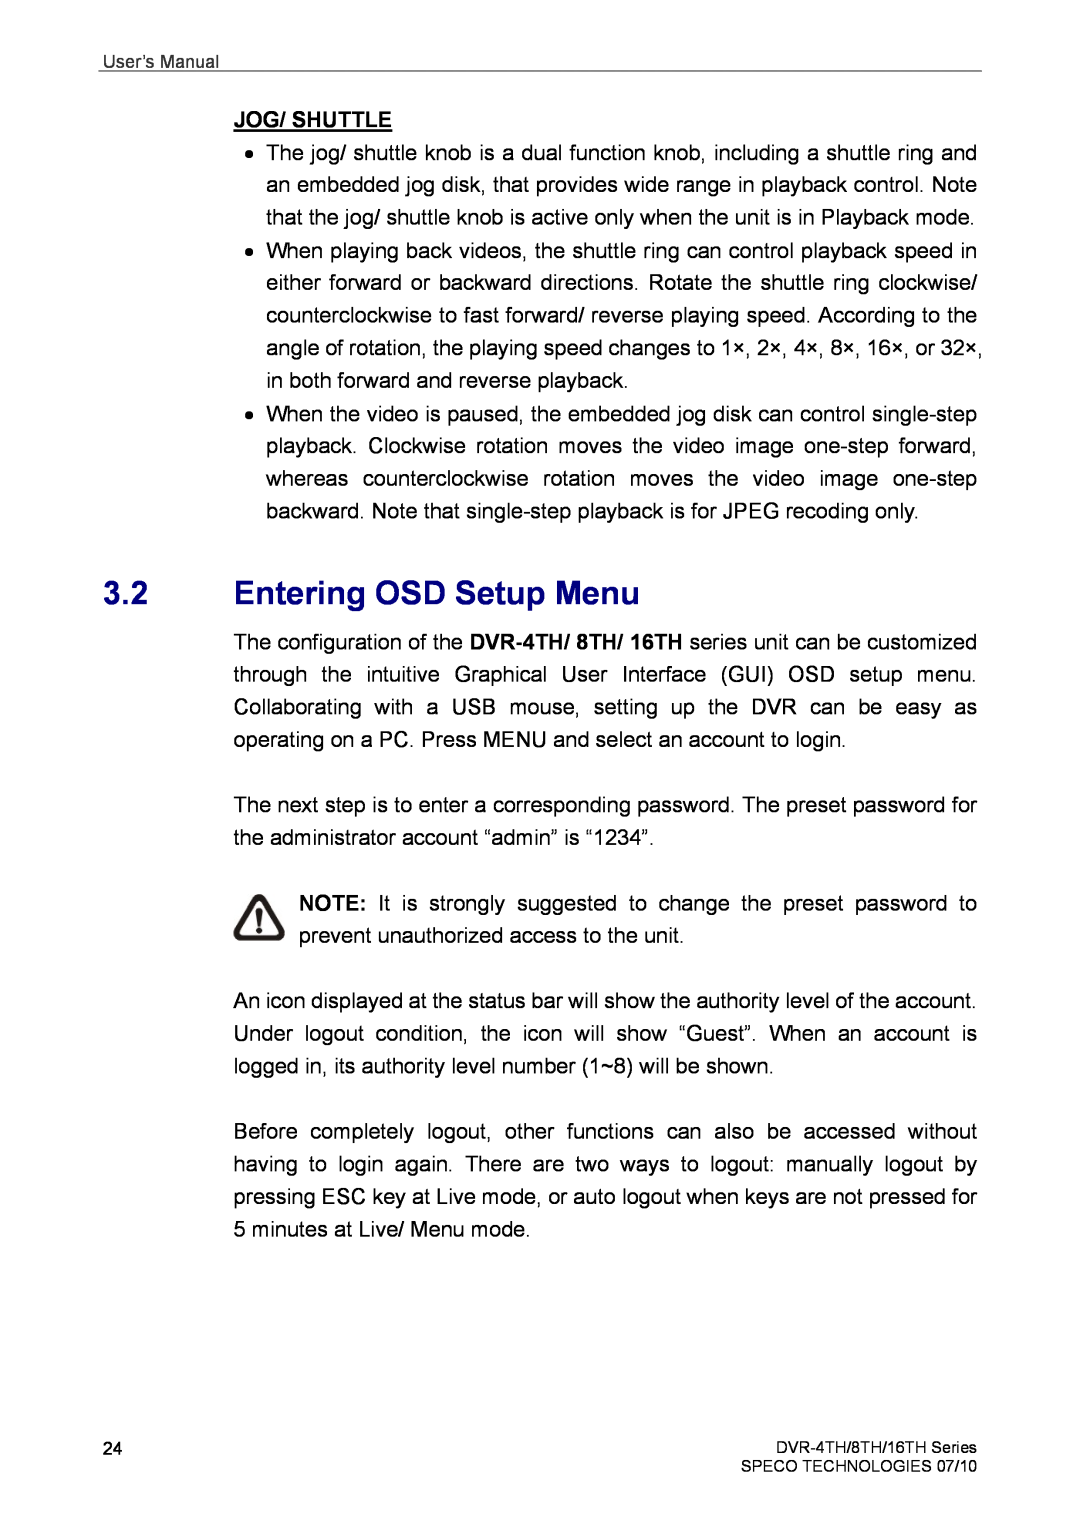 Speco Technologies 4TH, 8TH, 16TH user manual Entering OSD Setup Menu, Jog/ Shuttle 